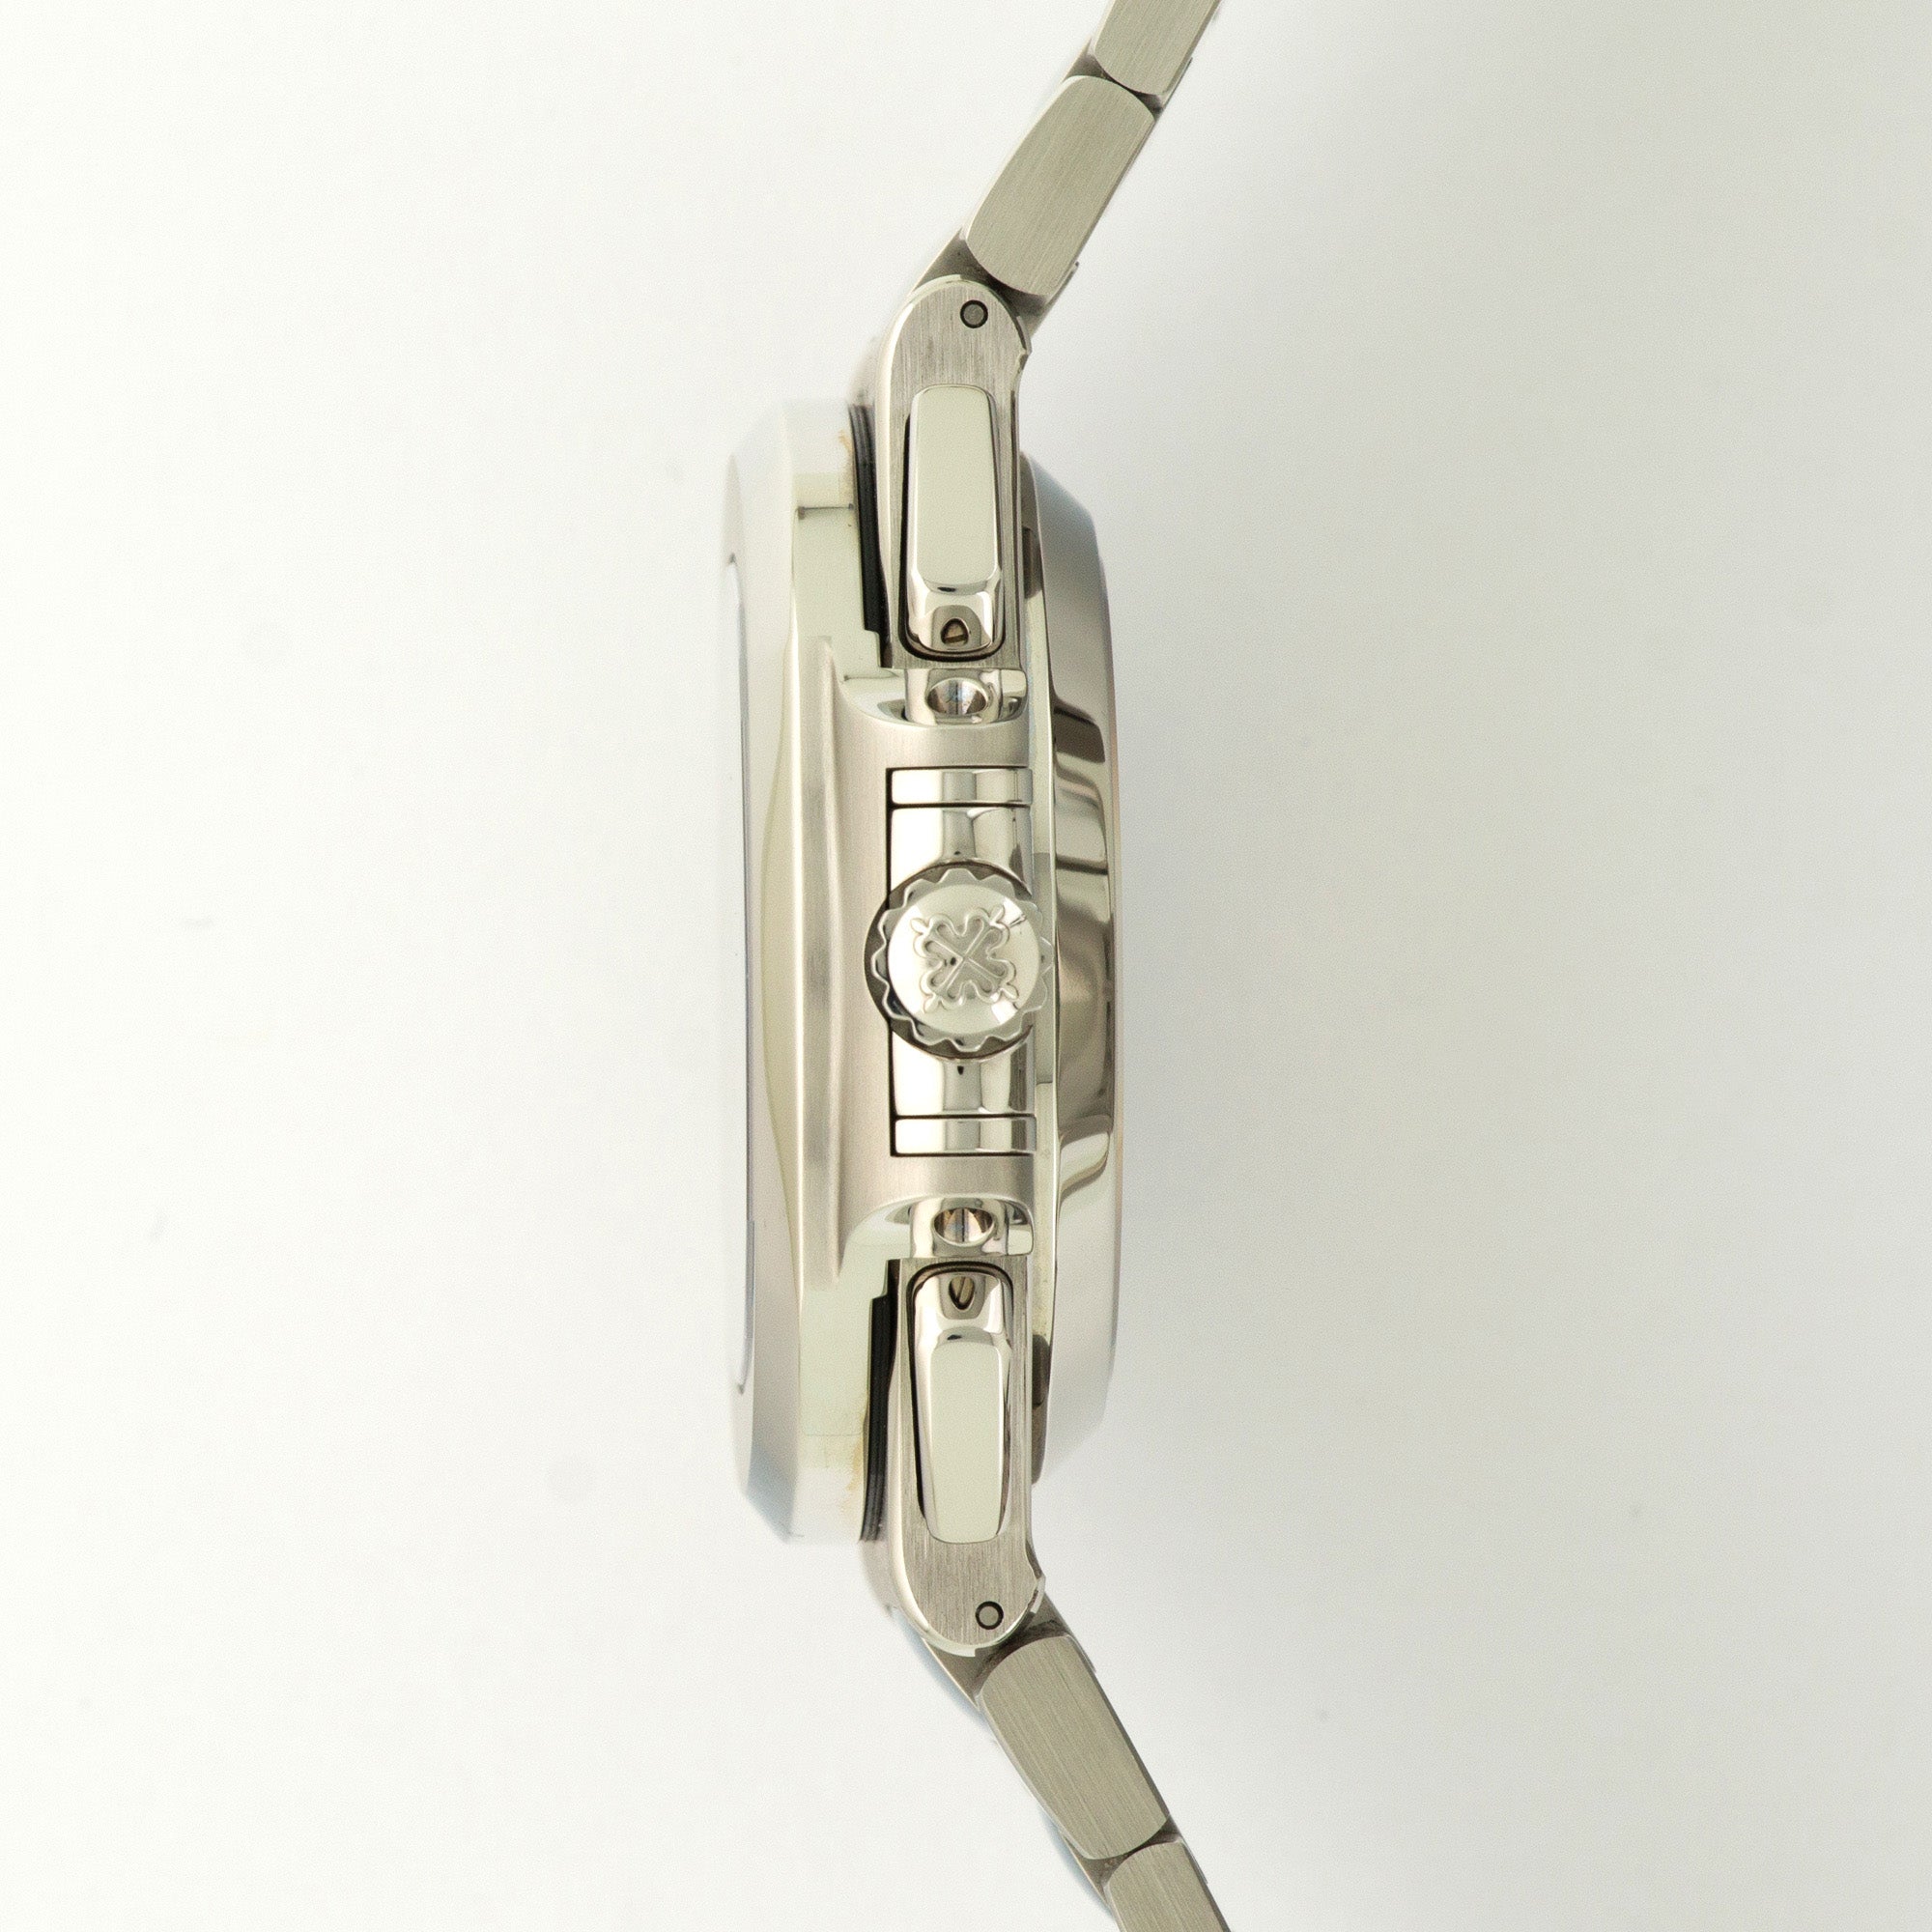 Patek Philippe - Patek Philippe Nautilus Chronograph Watch Ref. 5980 - The Keystone Watches